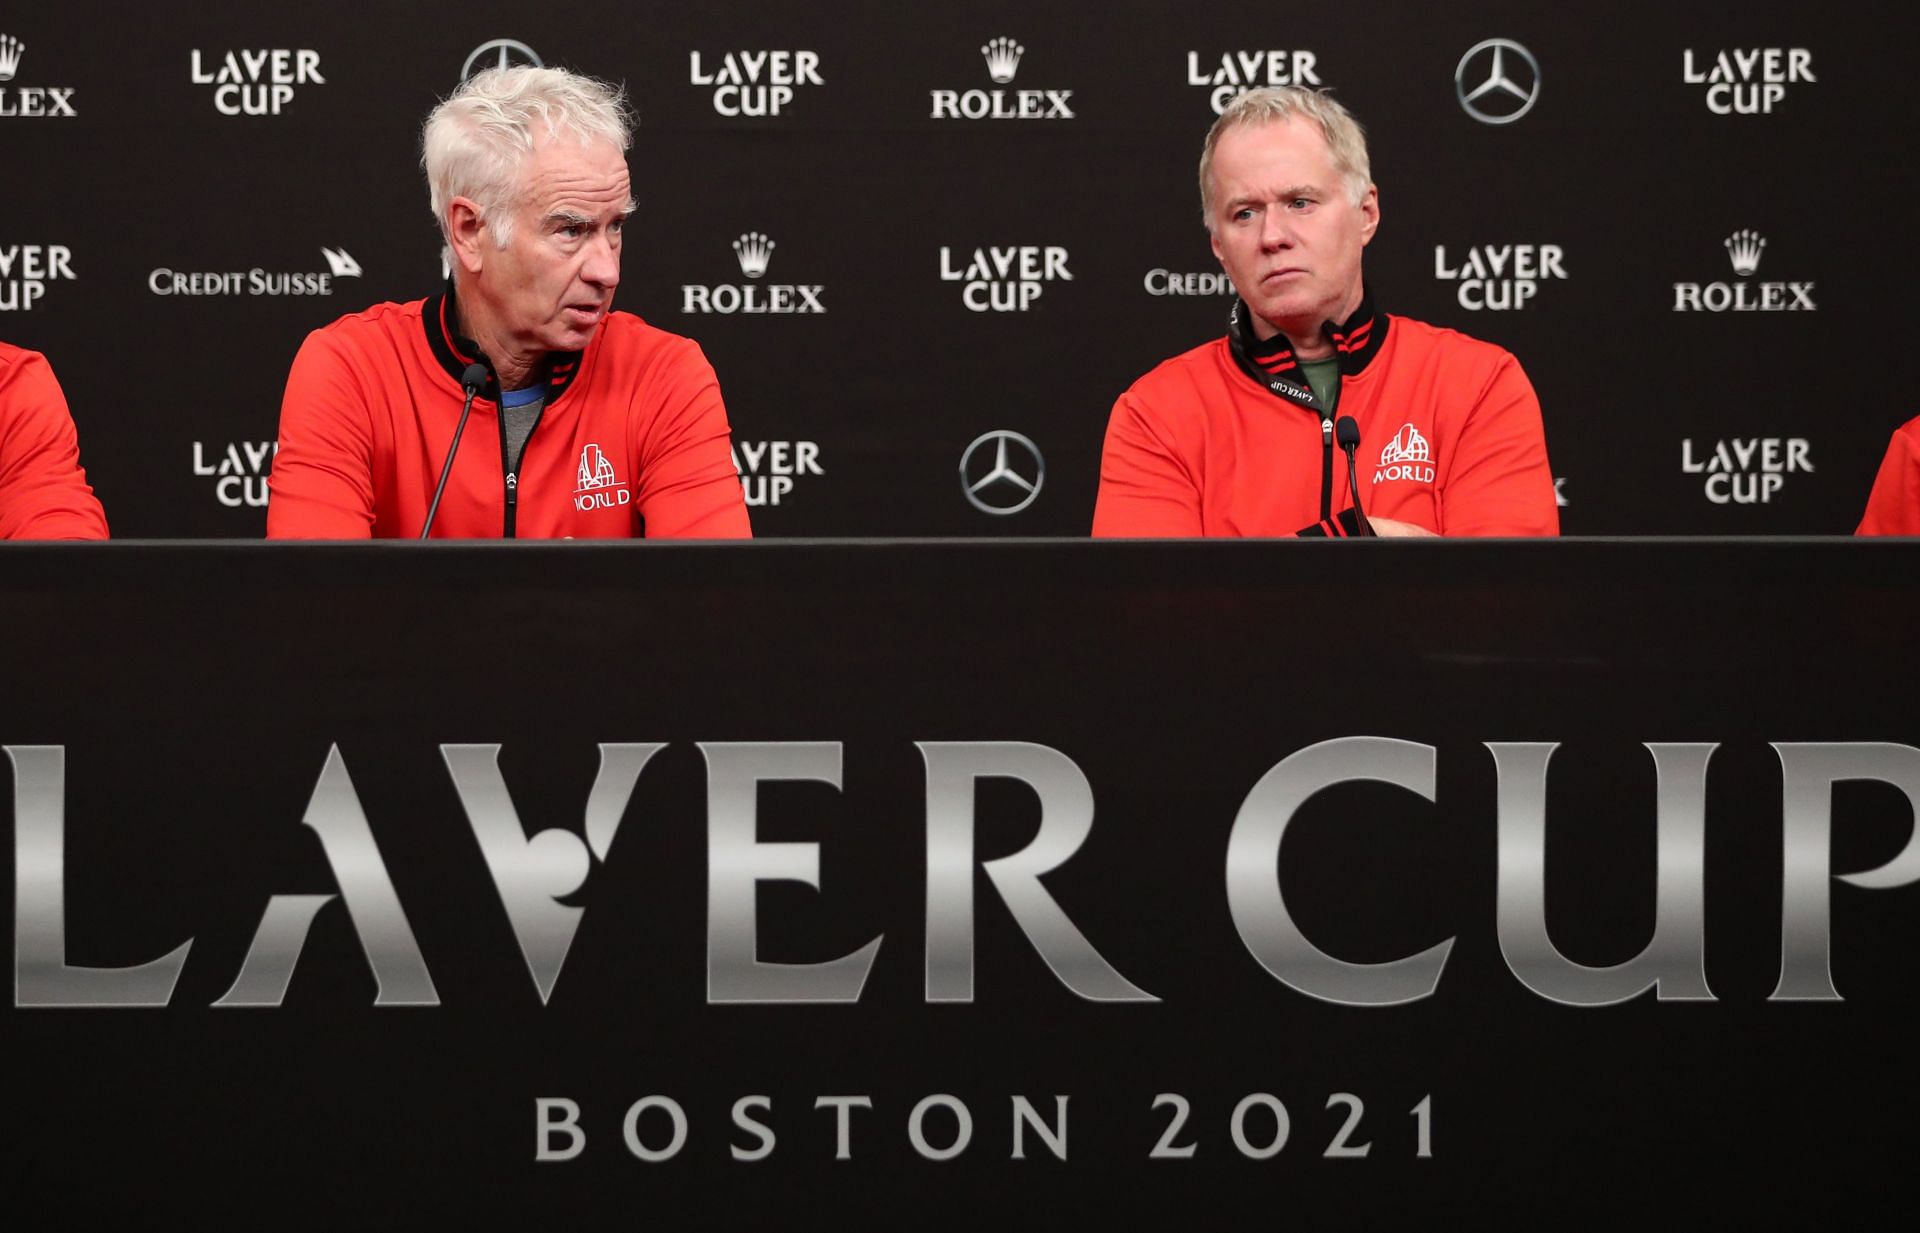 John McEnroe and Patrick McEnroe during the 2021 Laver Cup